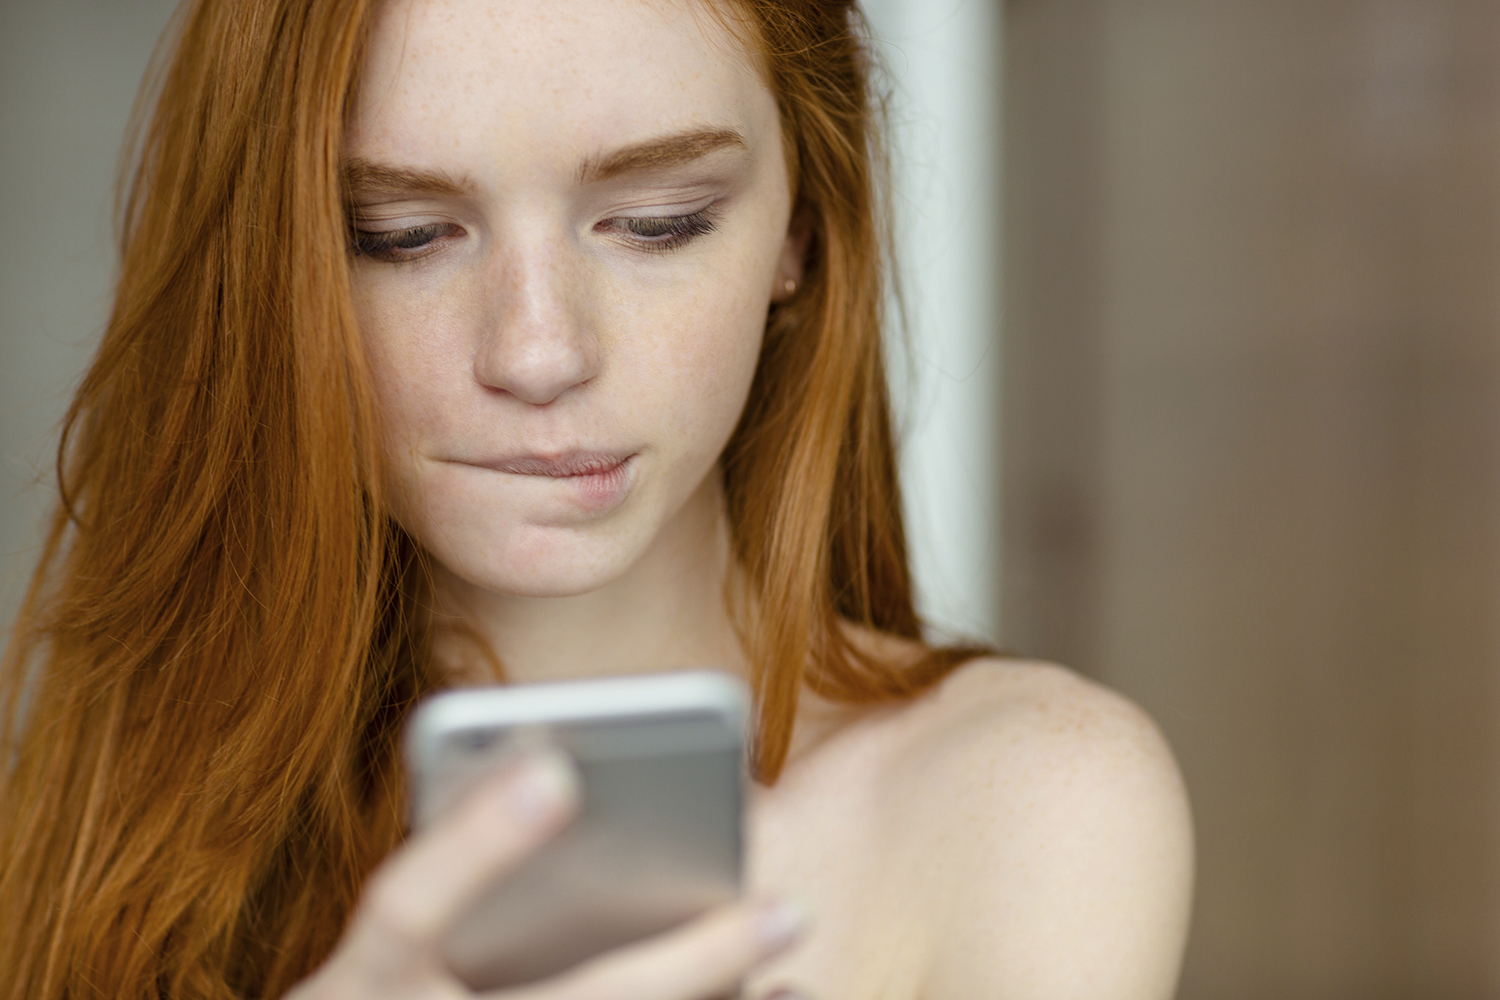 Closeup portrait of a beautiful redhead woman using smartphone